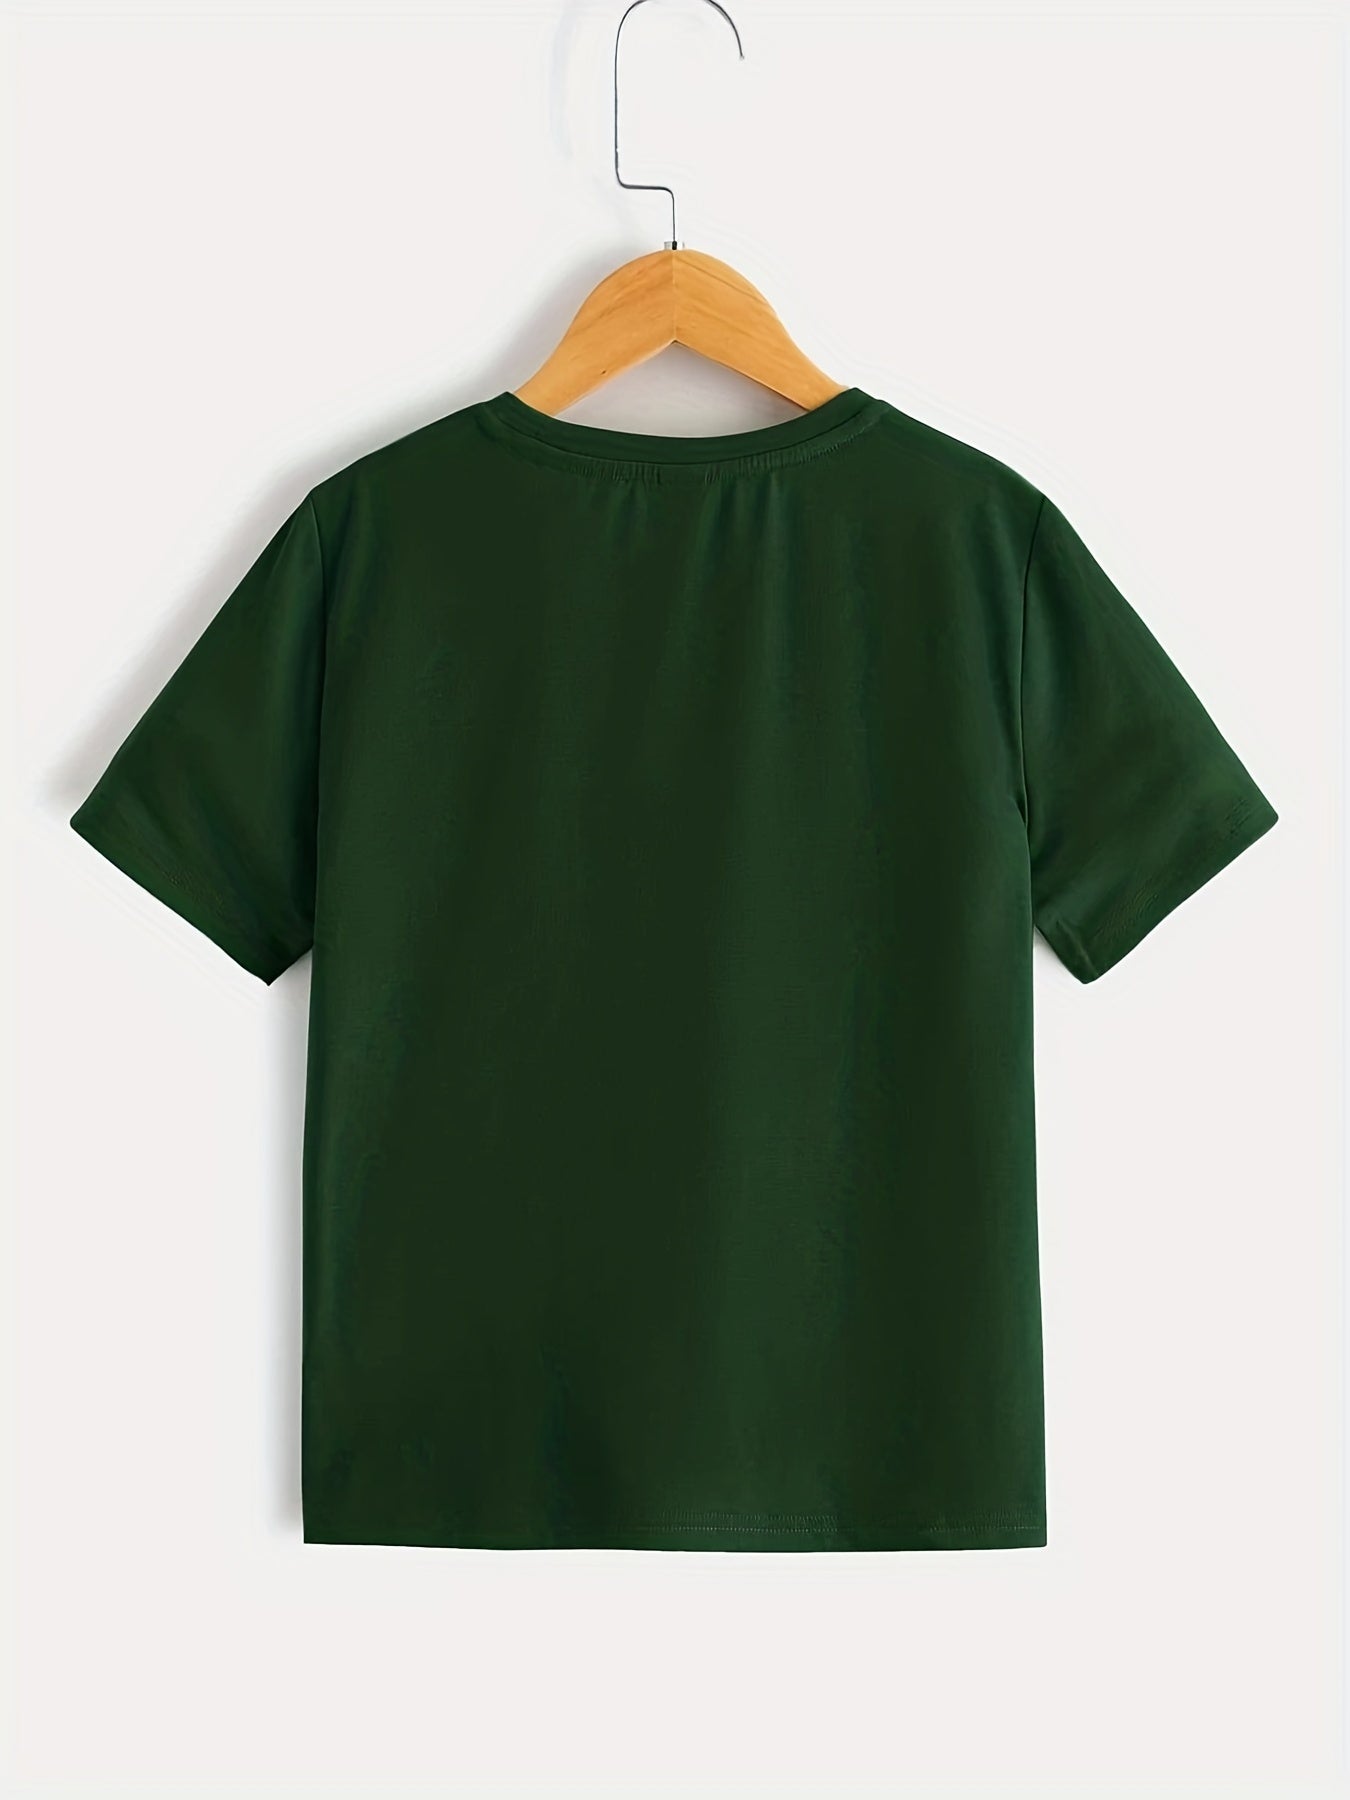 Trendy Gamepad Print Boys Creative T-shirt, Casual Lightweight Comfy Short Sleeve Tee Tops, Kids Clothes For Summer